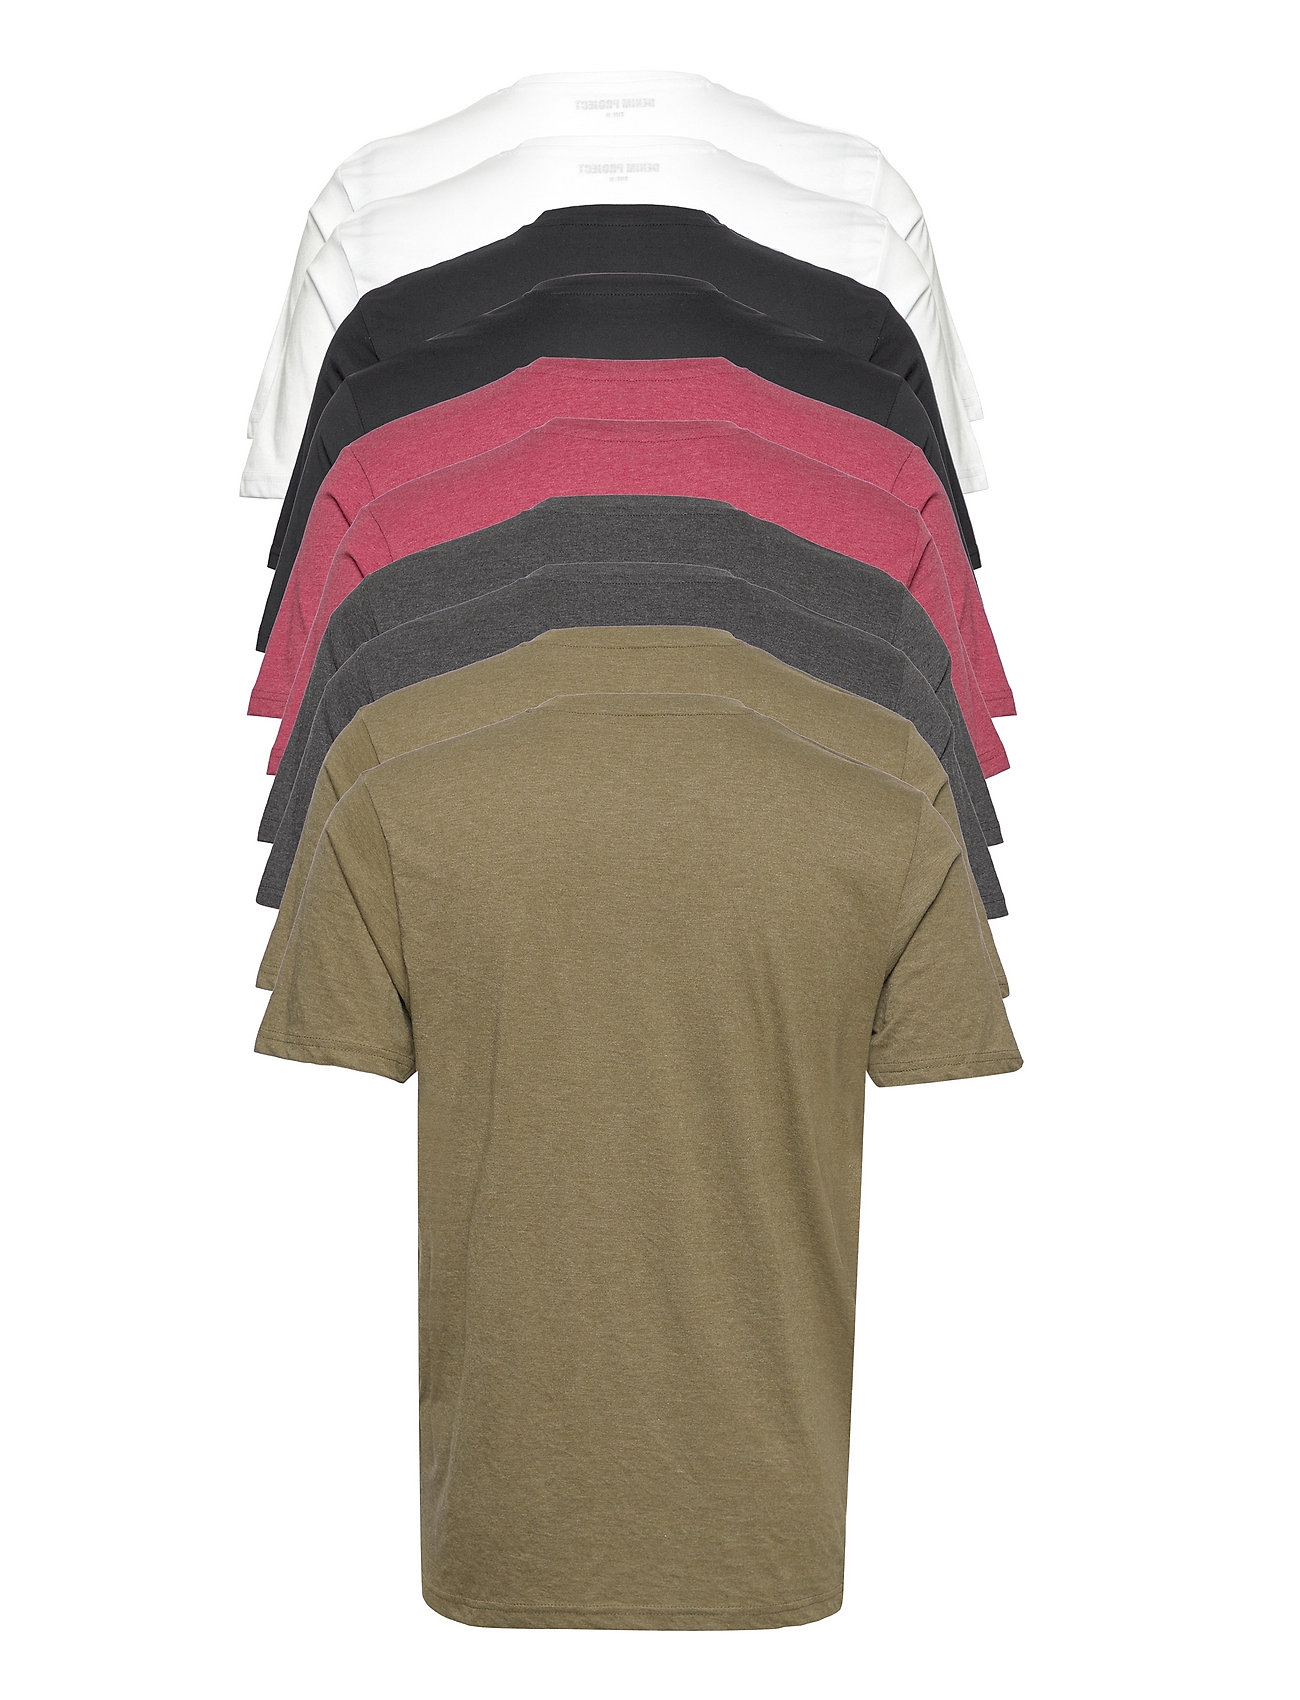 Denim project - 10 Pack T-SHIRT - laisvalaikio marškinėliai - 2xdgm, 2xolive night melange,2x bordeaux melange, - 1